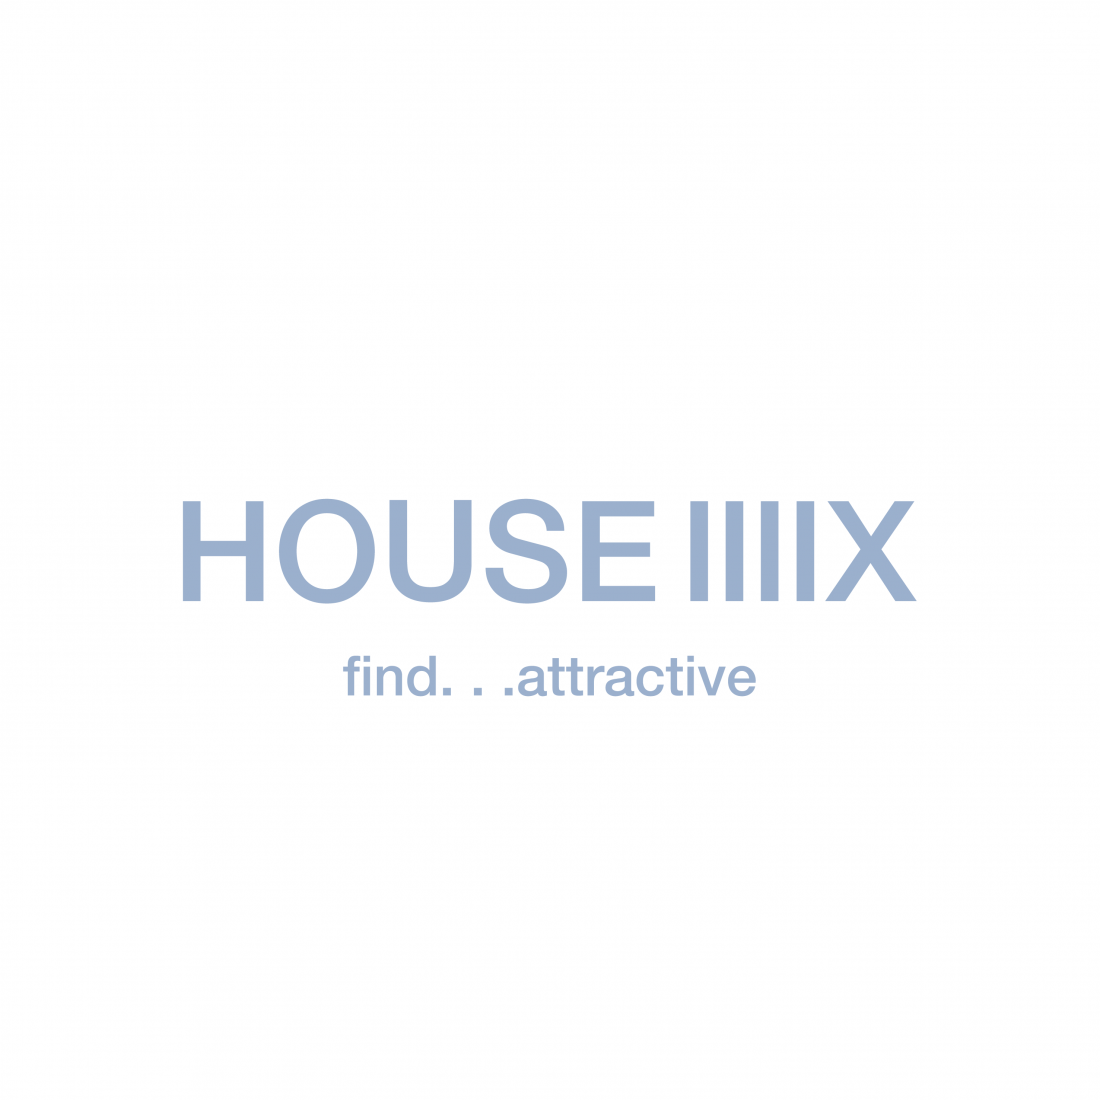 HOUSE llllX アイキャッチ画像